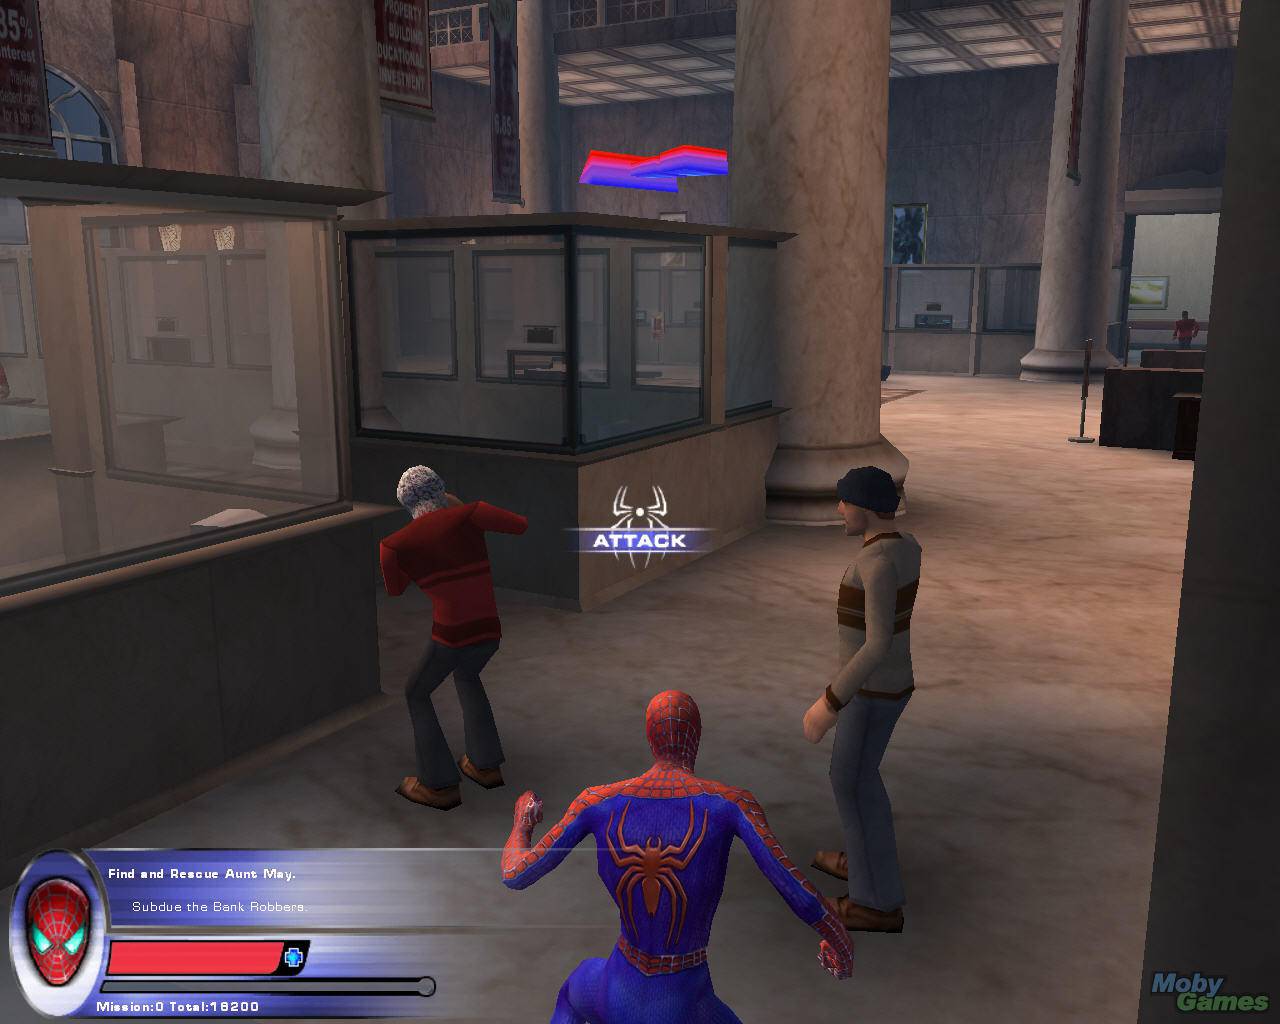 Spider Man 2001 Pc Game Download Full Version